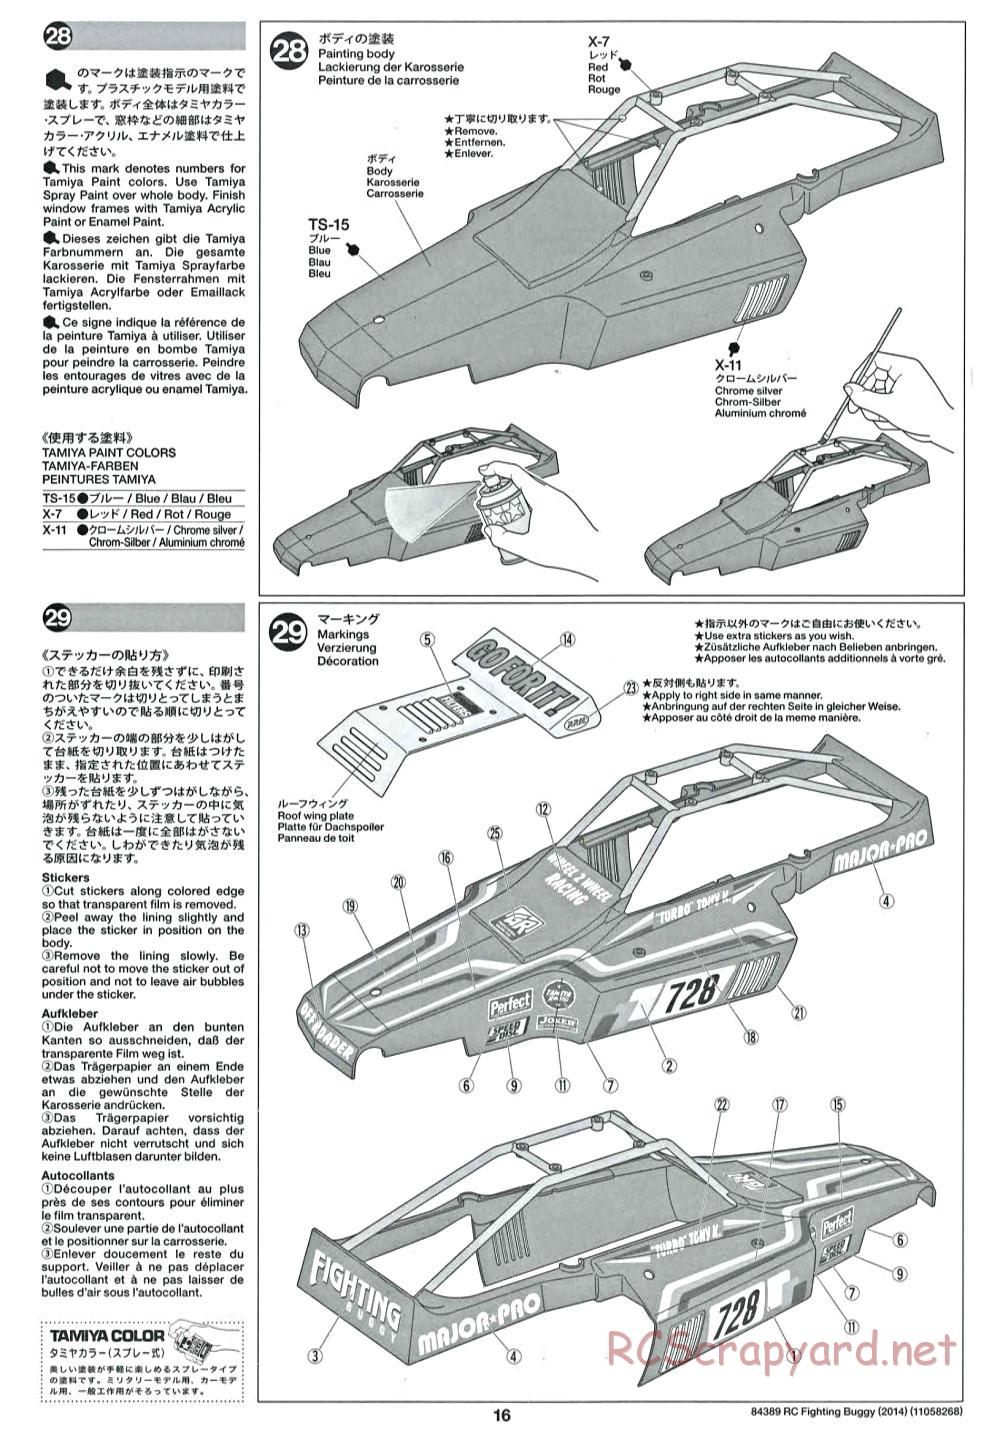 Tamiya - Fighting Buggy (2014) Chassis - Manual - Page 16